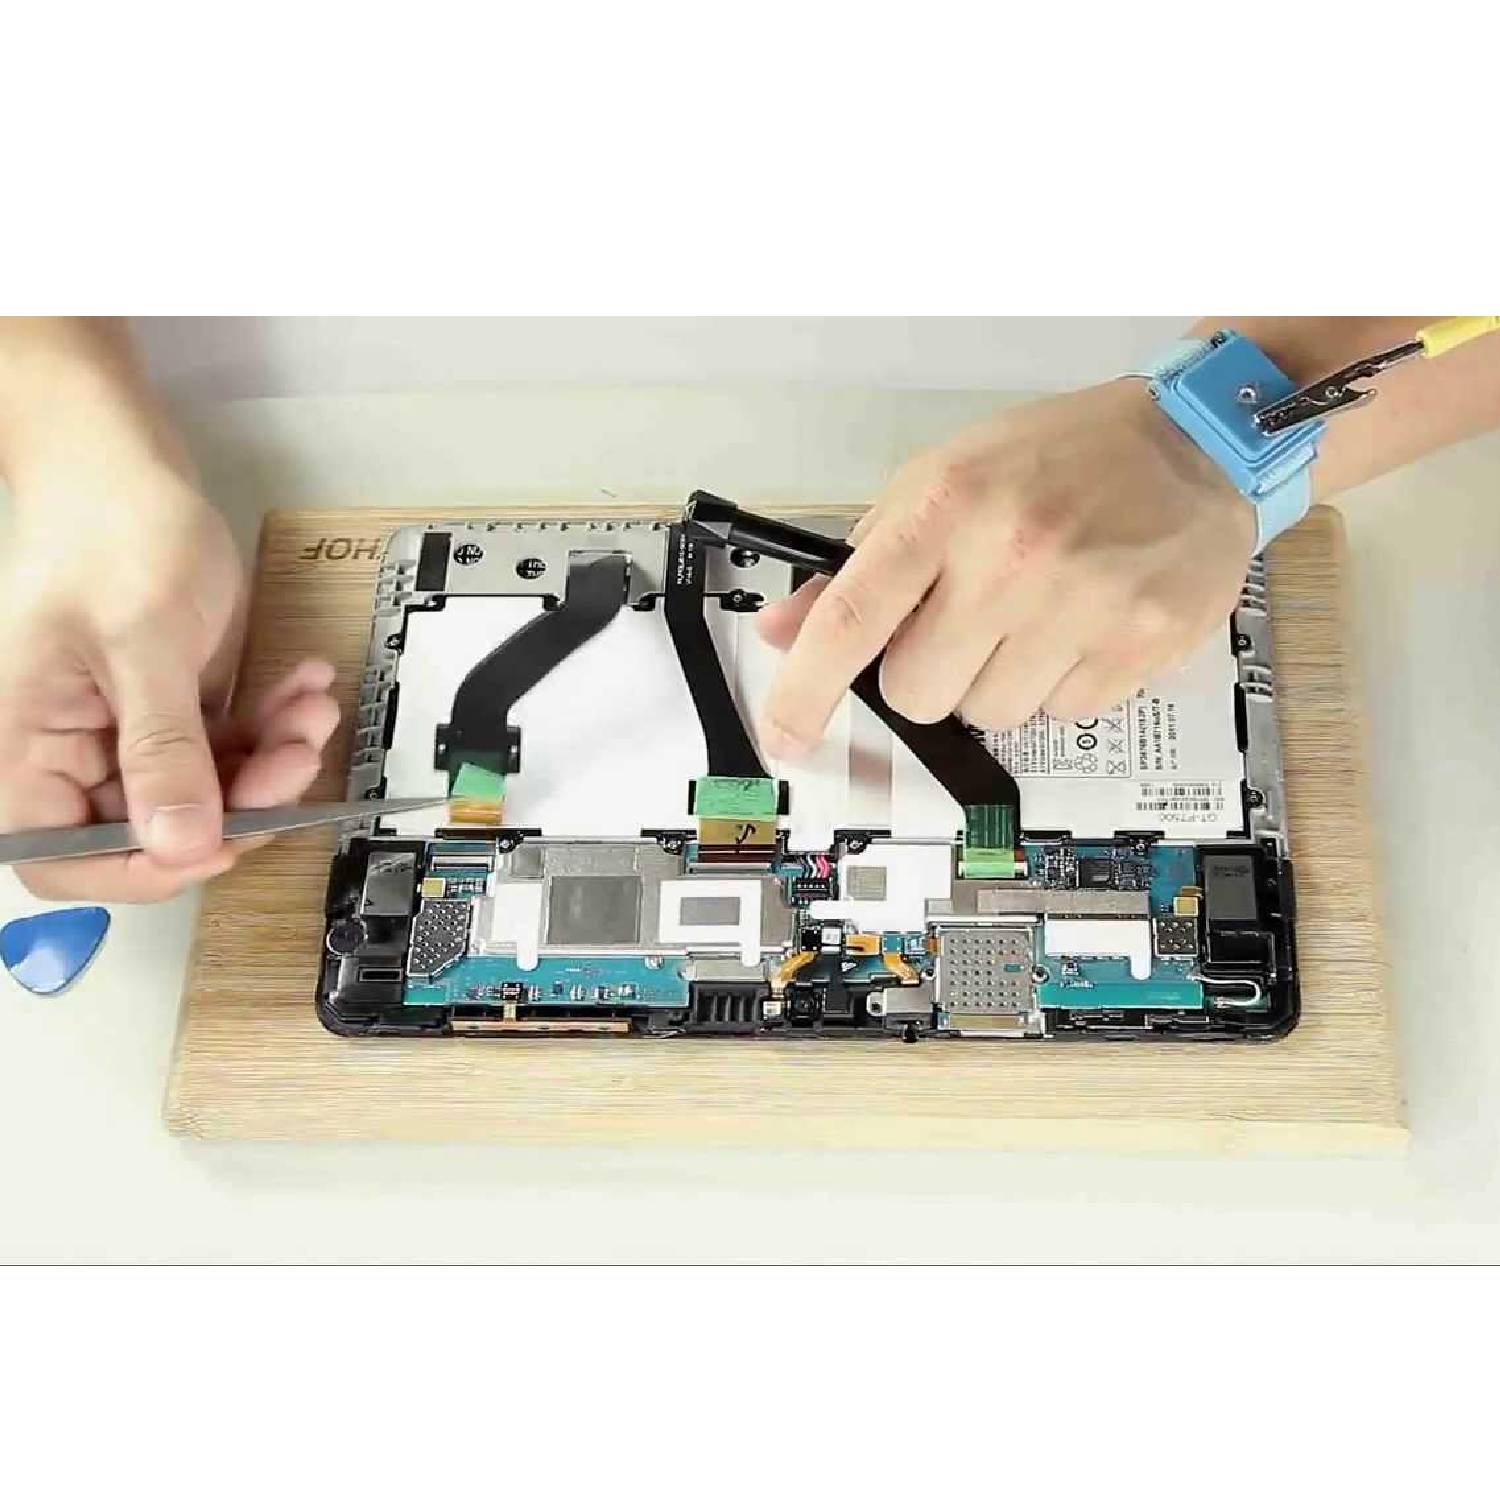 Samsung Galaxy Tab Repair